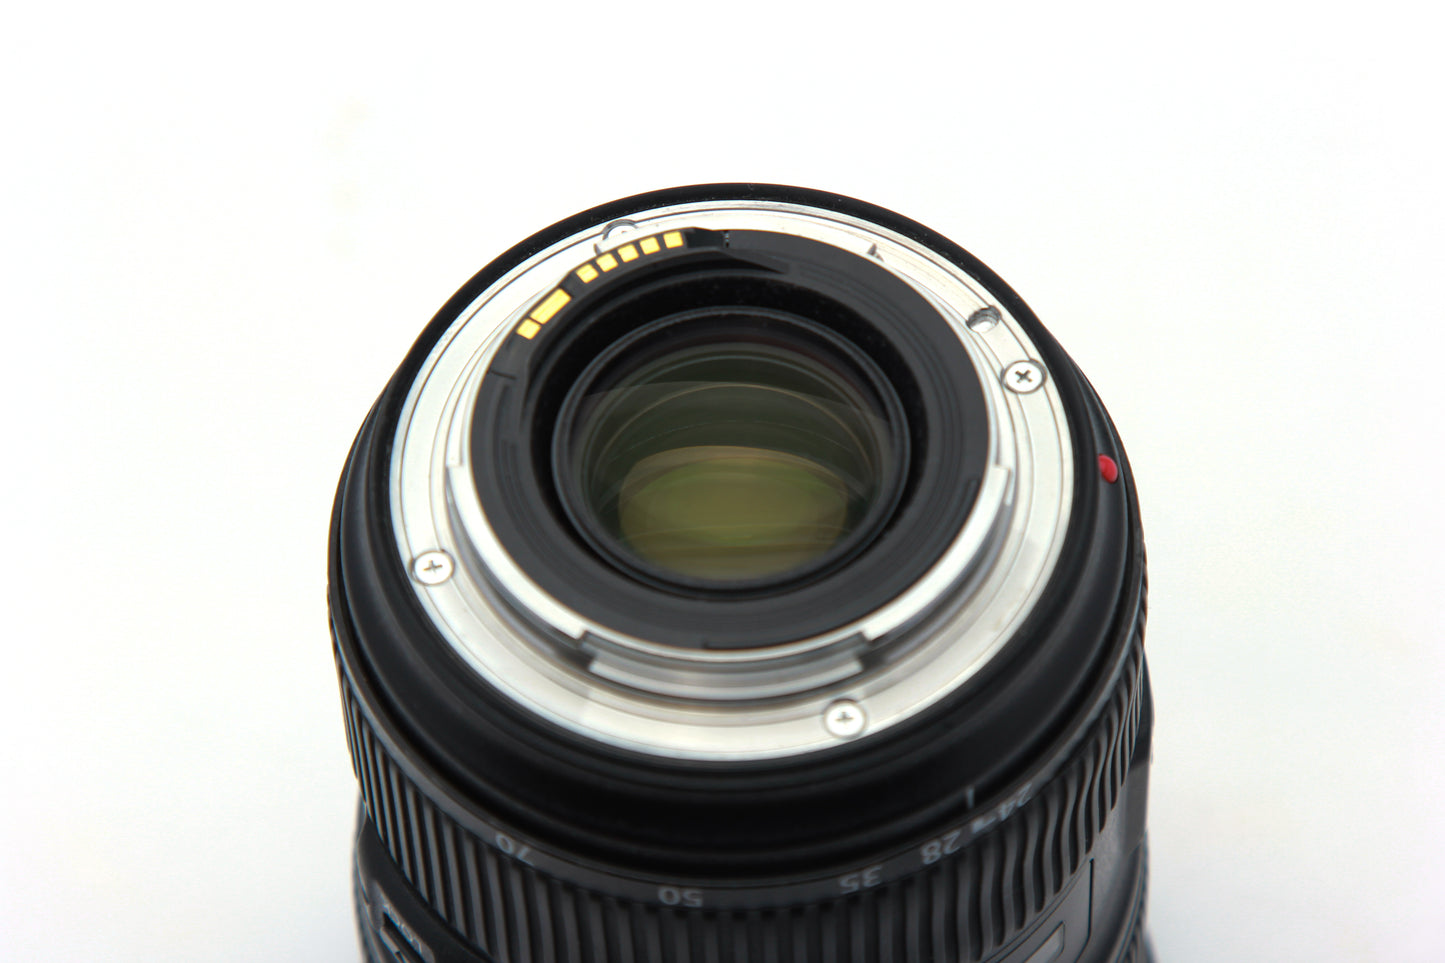 Used Canon EF 24-70mm f/2.8L II USM Lens